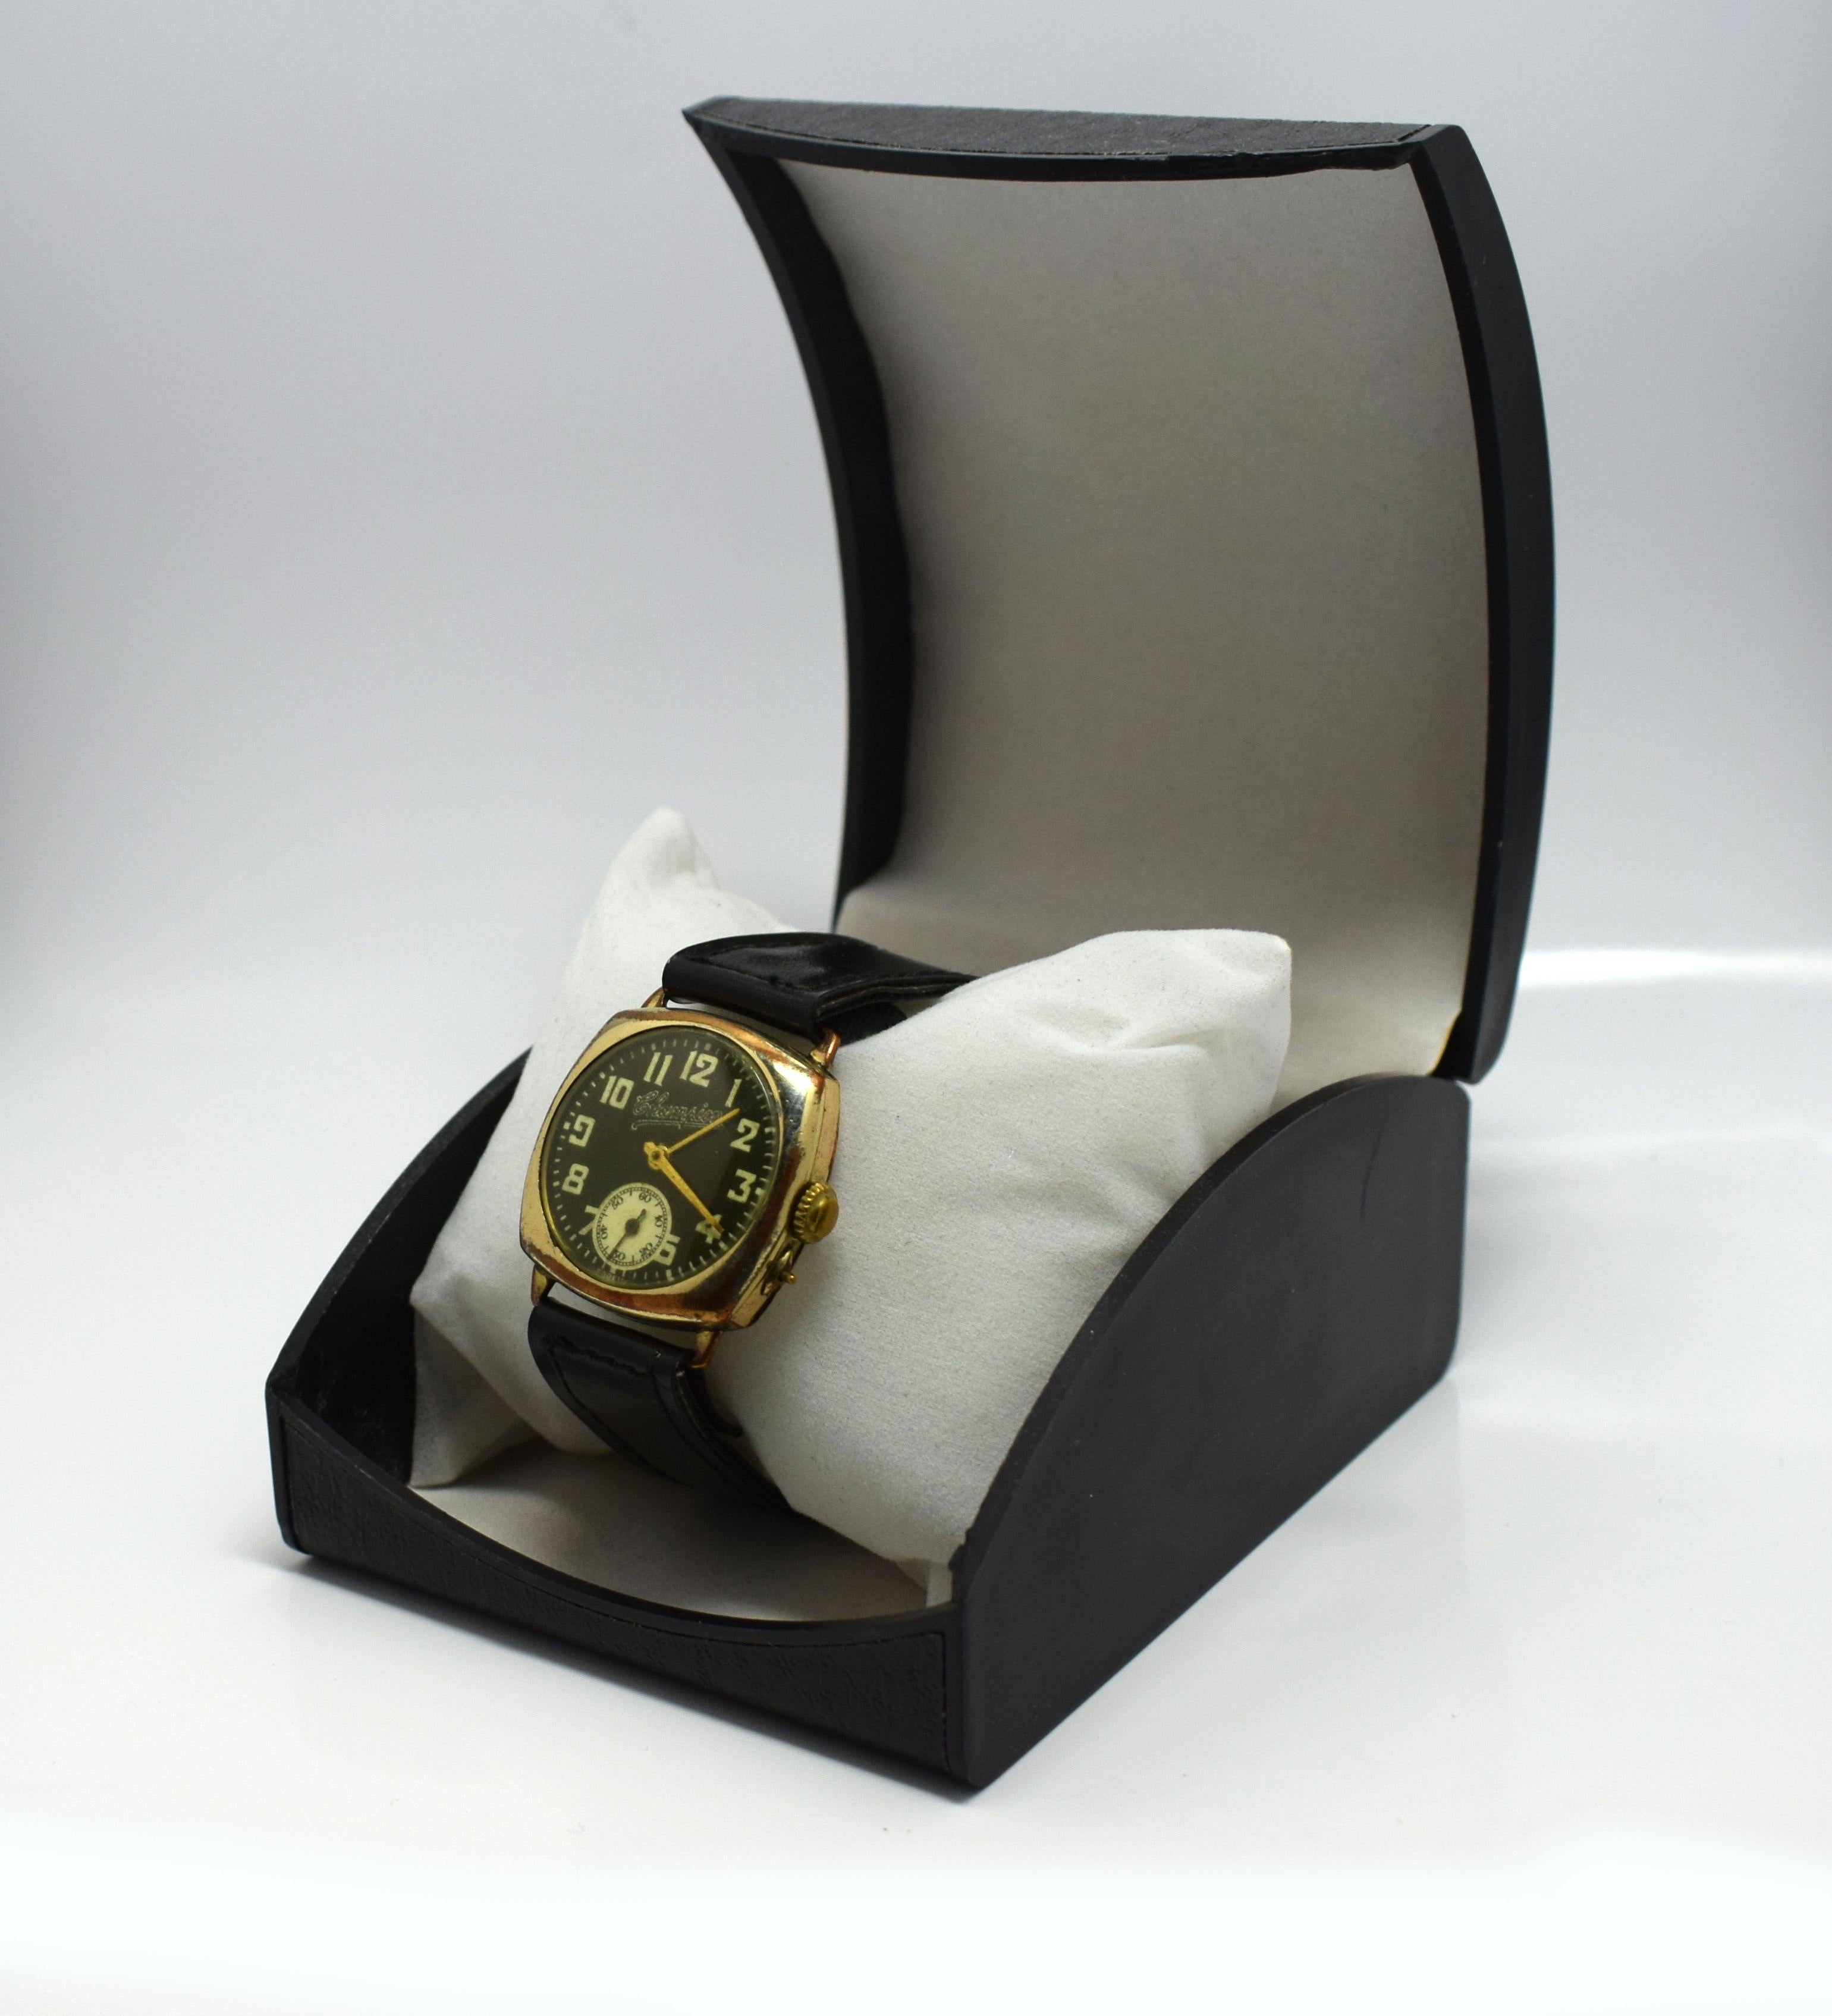 20th Century 1930s Champion Art Deco Men's Gold-Plated Cushion Watch